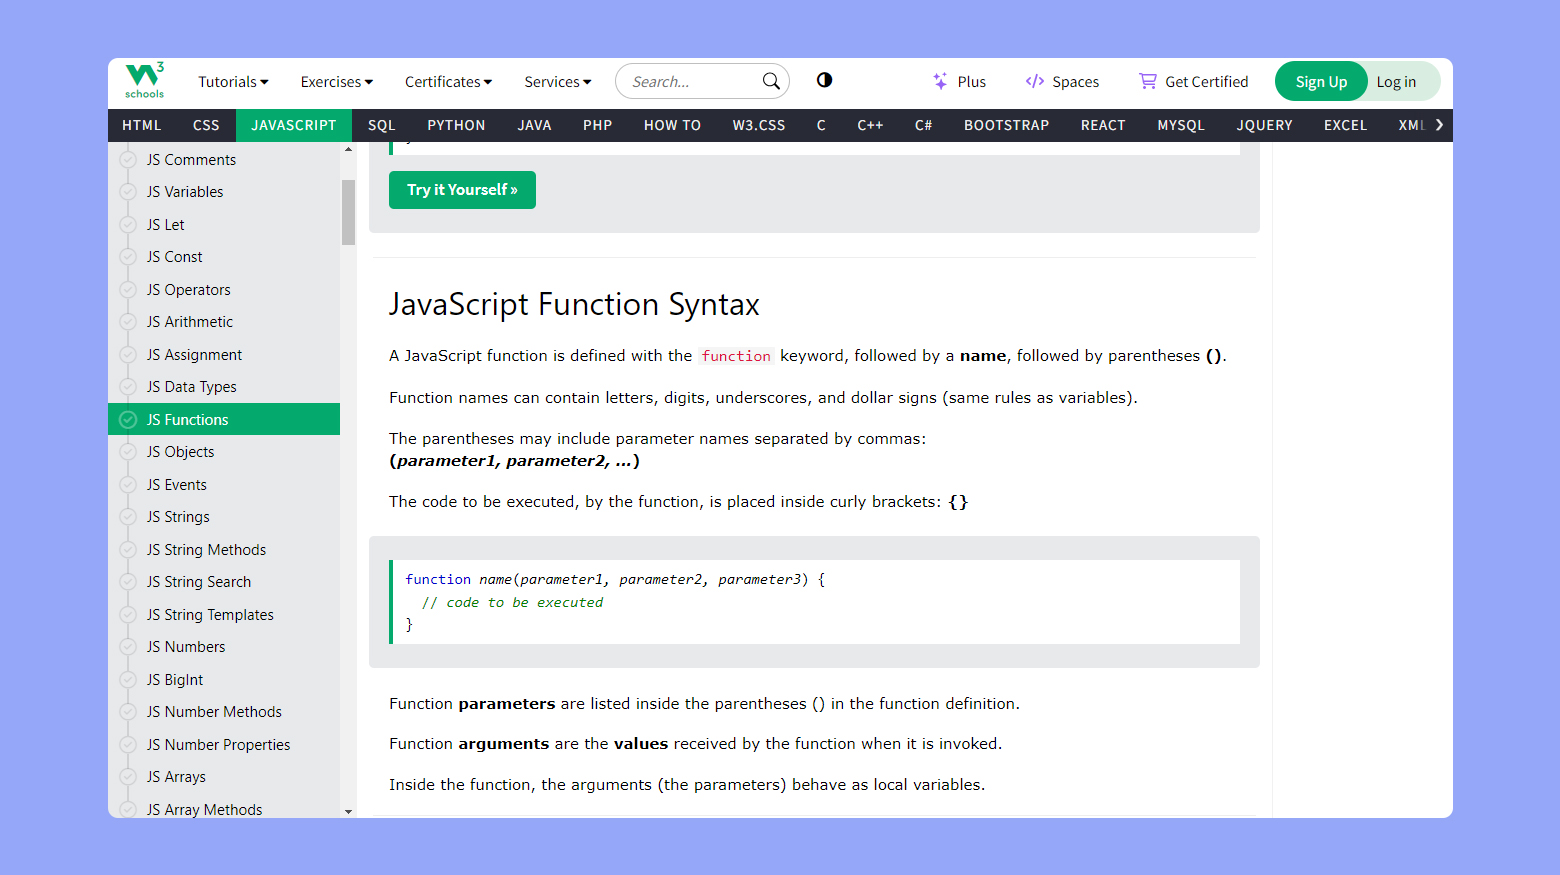 Java Script Functions tutorial in W3 schools.